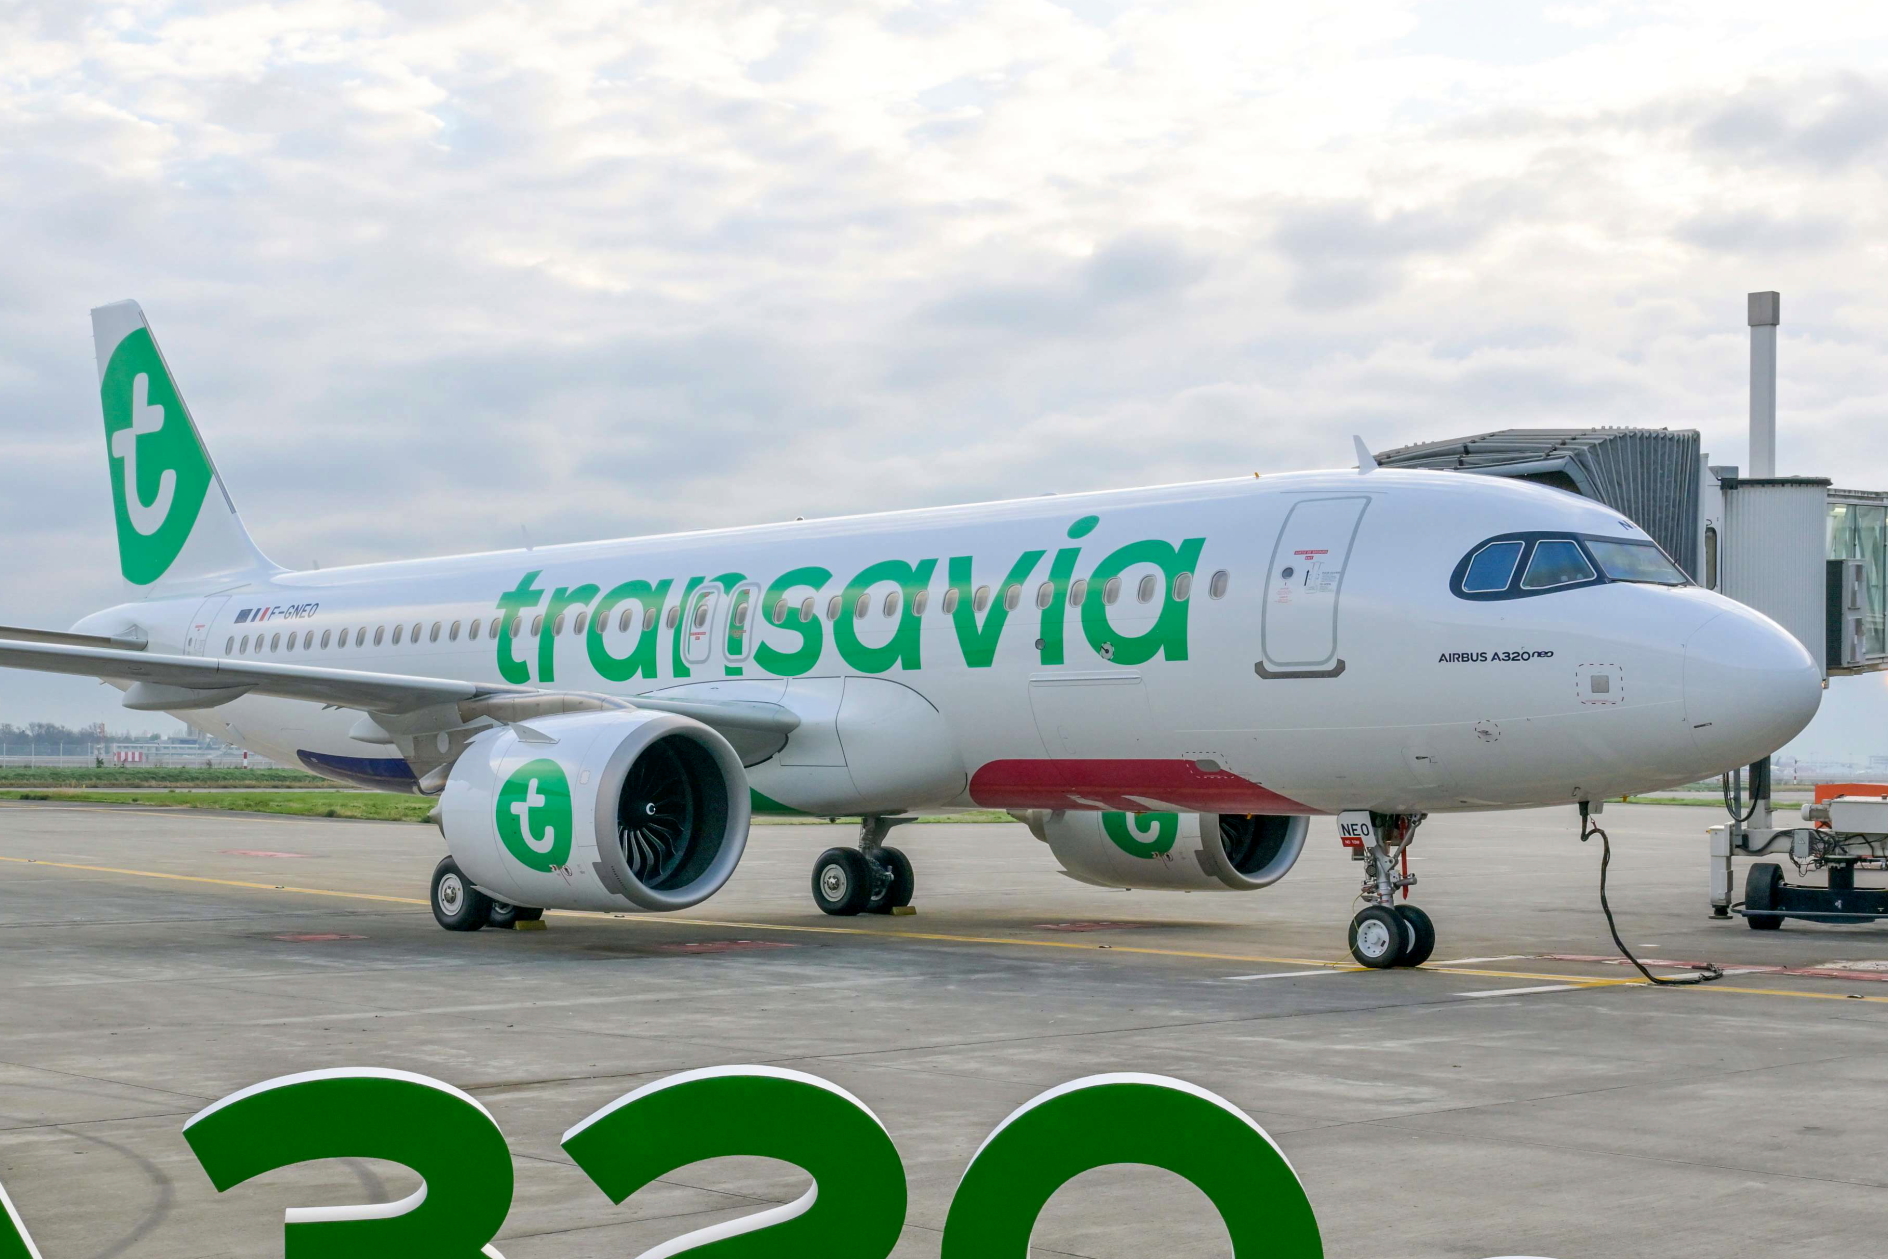 TransaviaAirbusA320neo.jpg